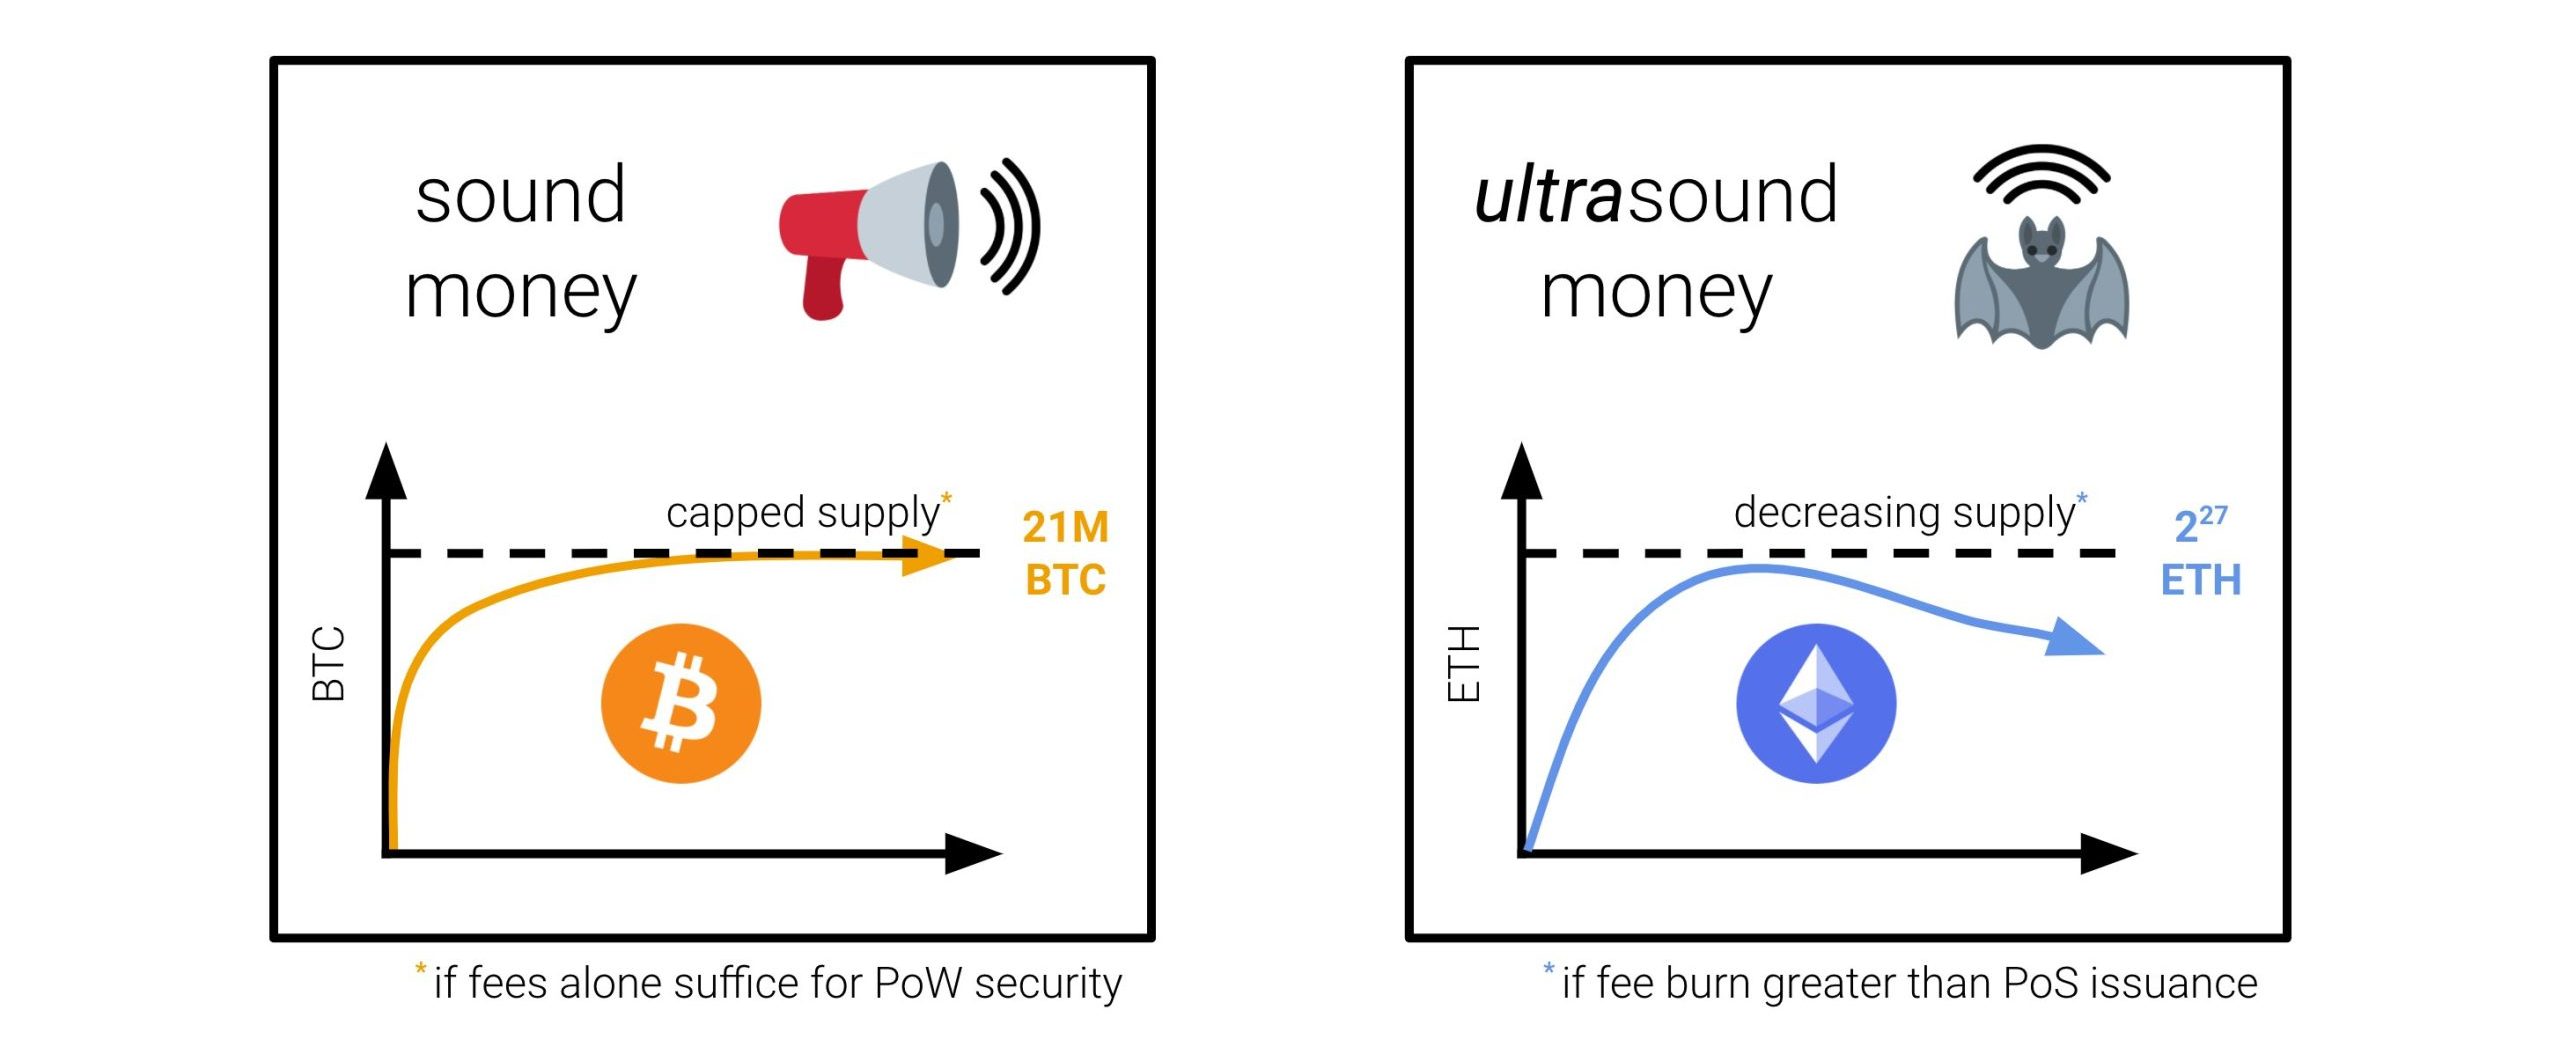 ultra sound money